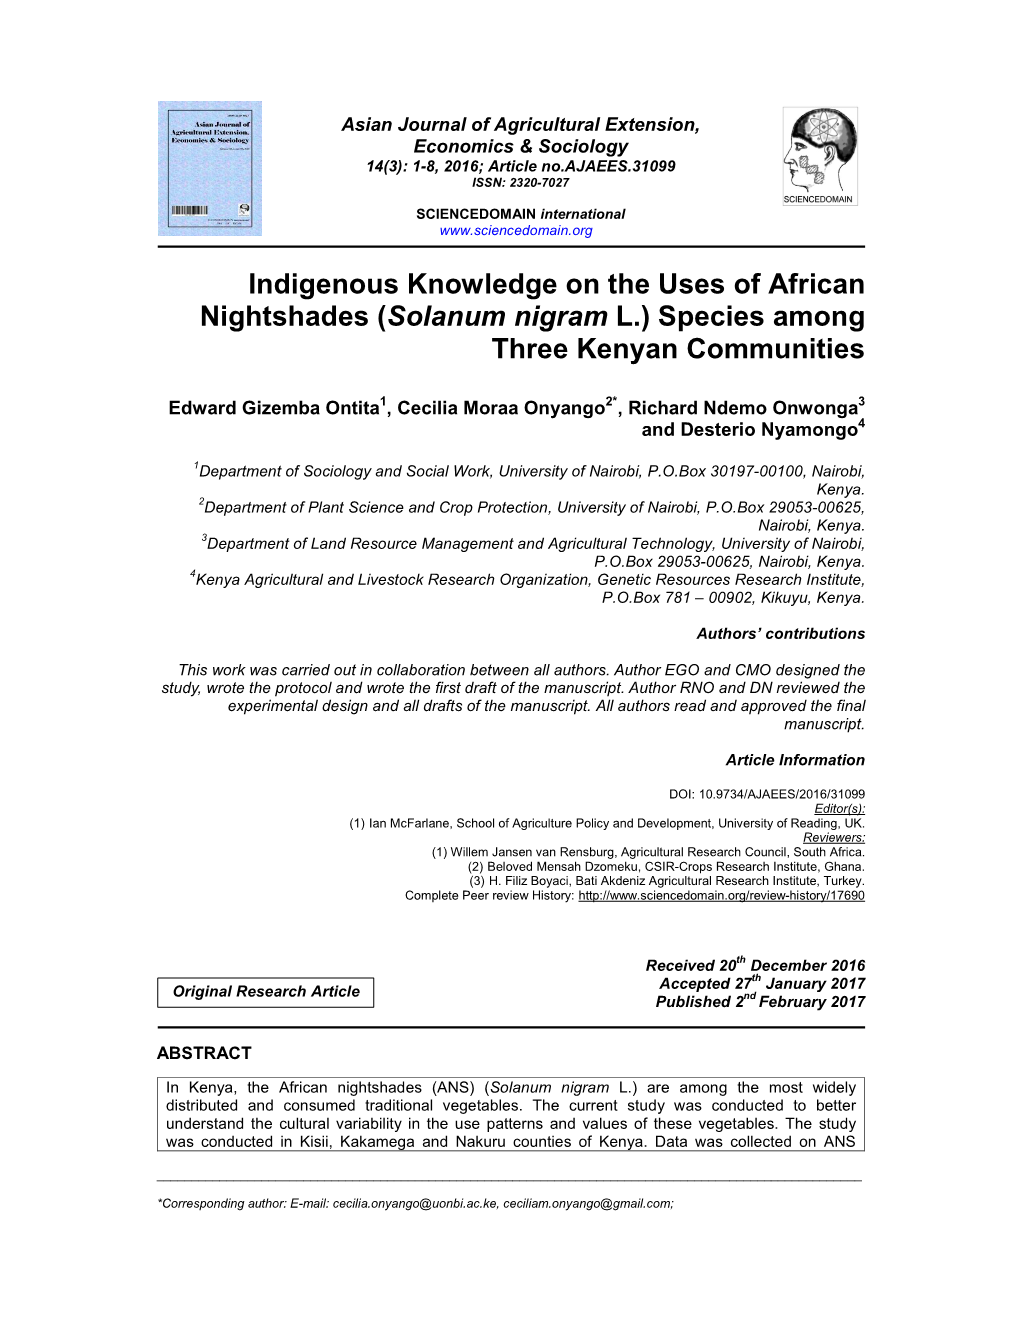 Indigenous Knowledge on the Uses of African Nightshades ( Solanum Nigram L.) Species Among Three Kenyan Communities